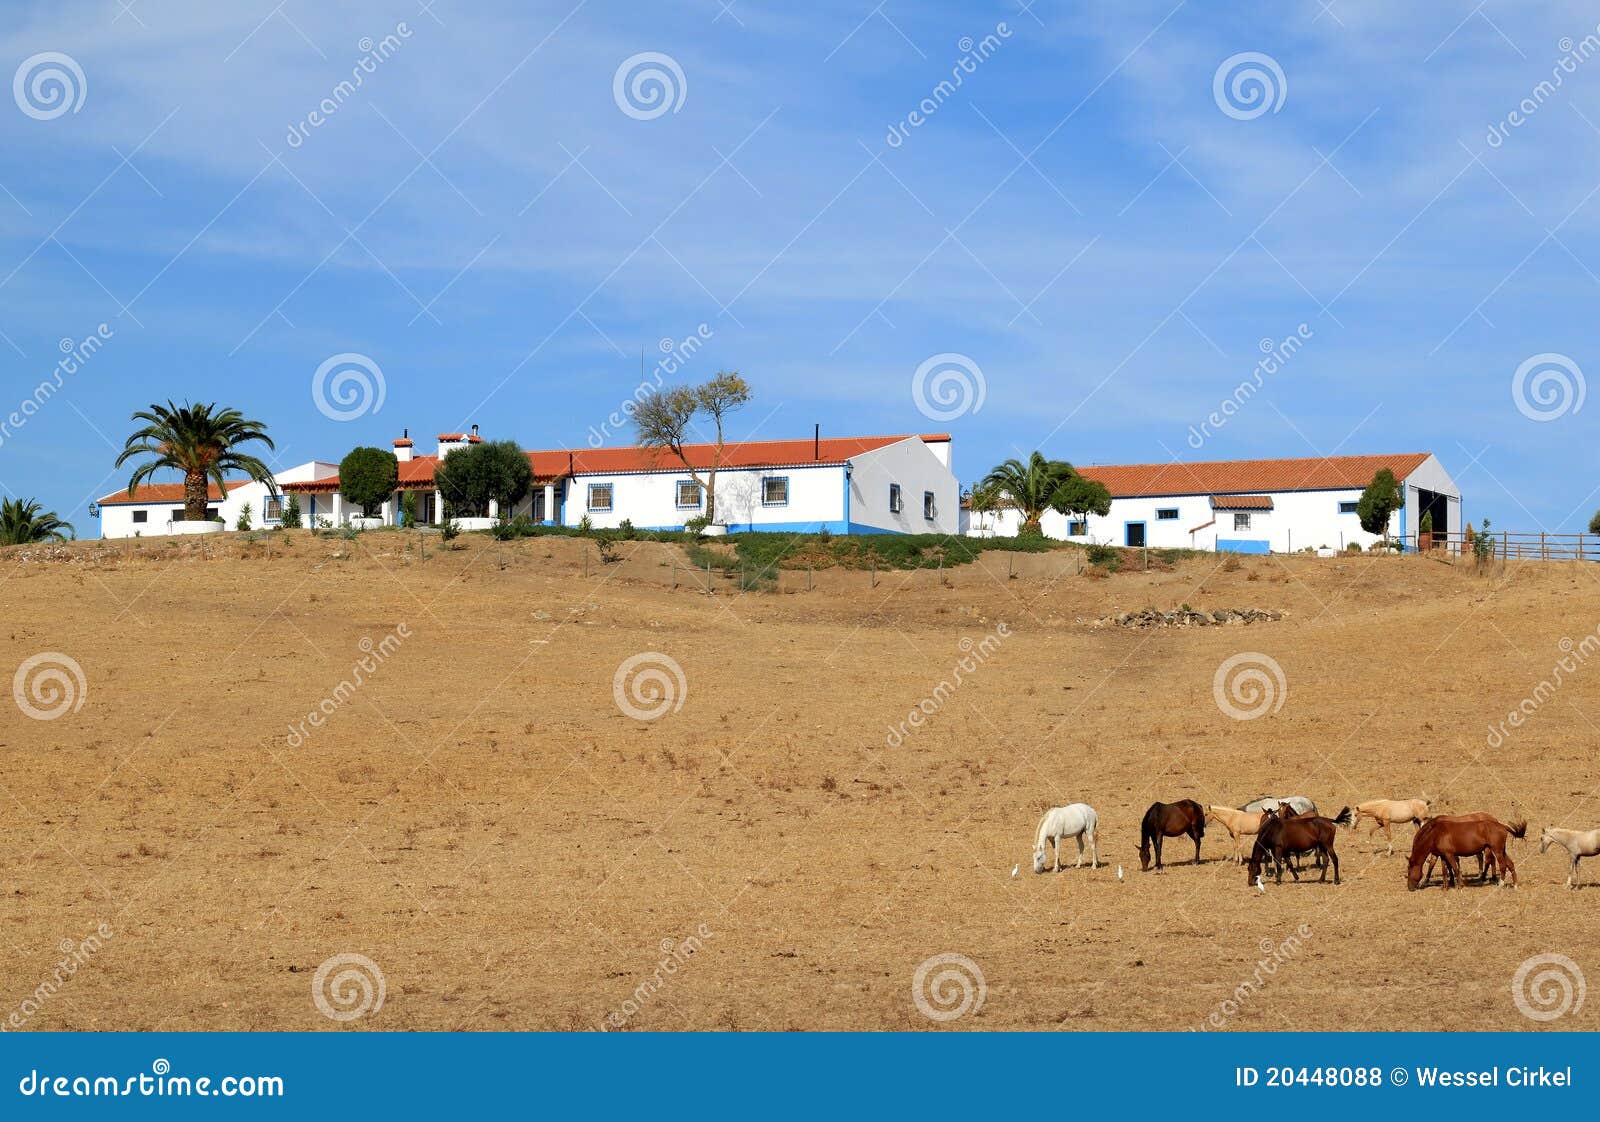 typical portuguese quinta in the region alentejo